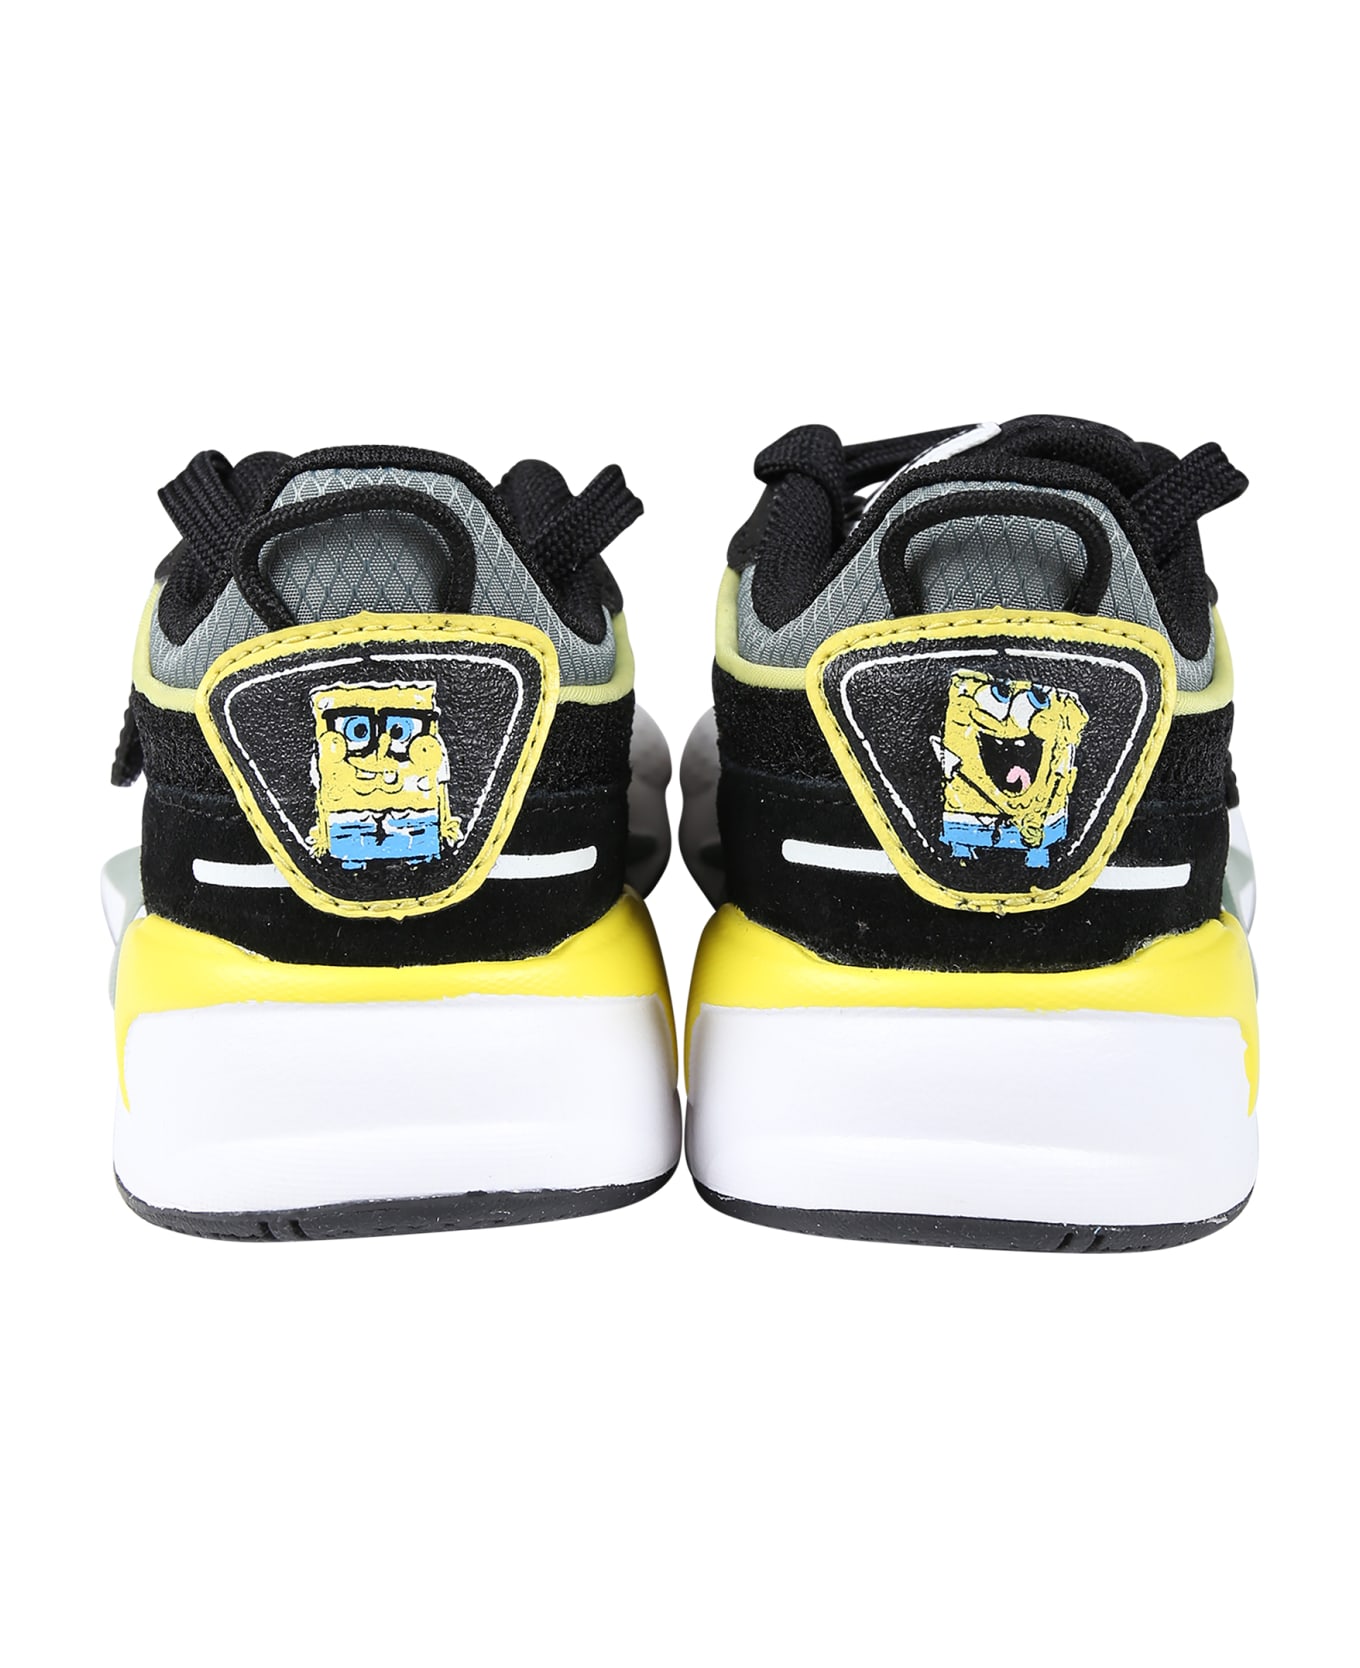 Puma Multicolor Sneakers For Boy With Logo - Black シューズ